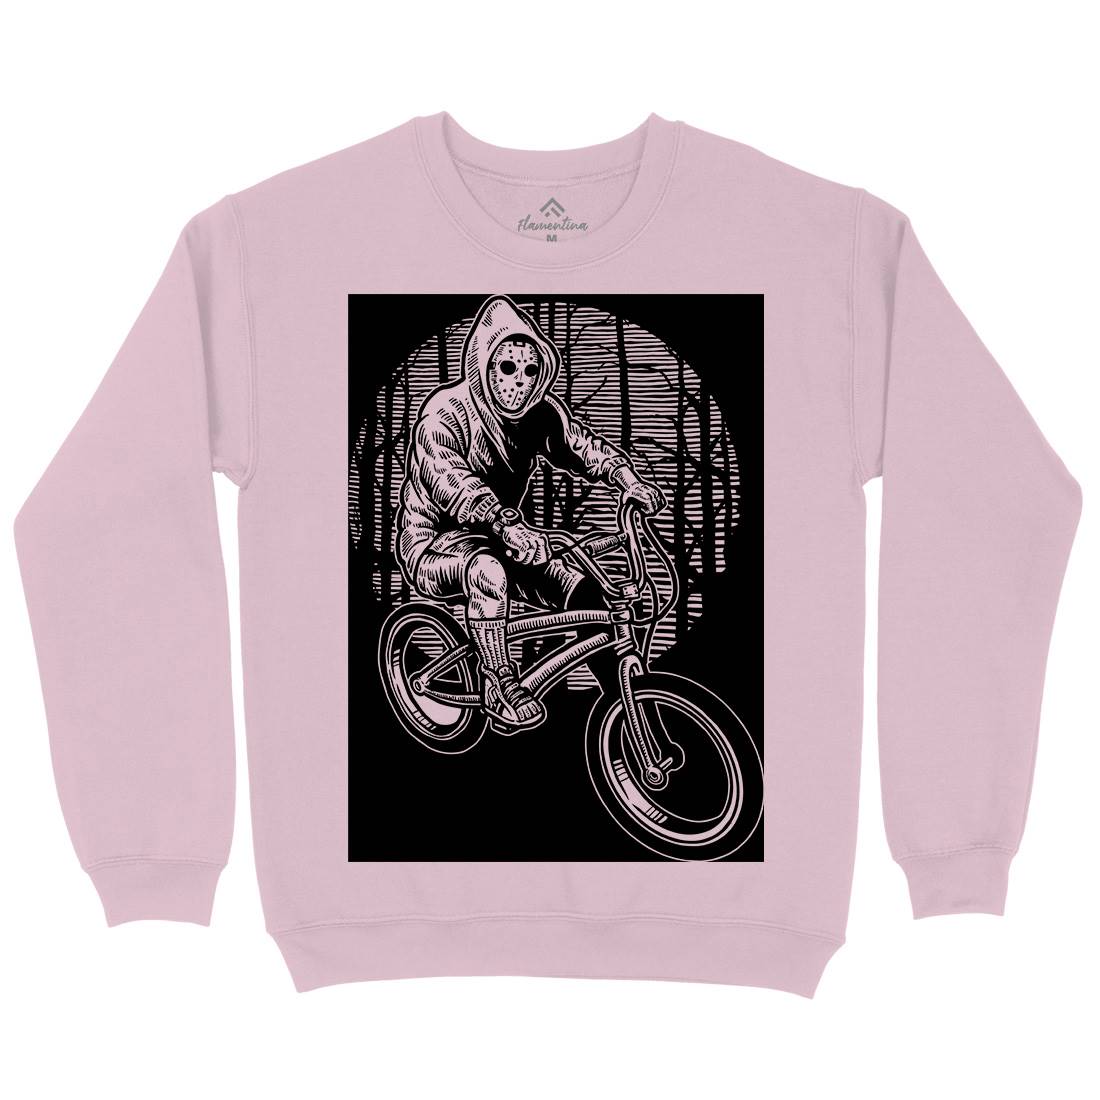 Ride Bike Kids Crew Neck Sweatshirt Horror A563